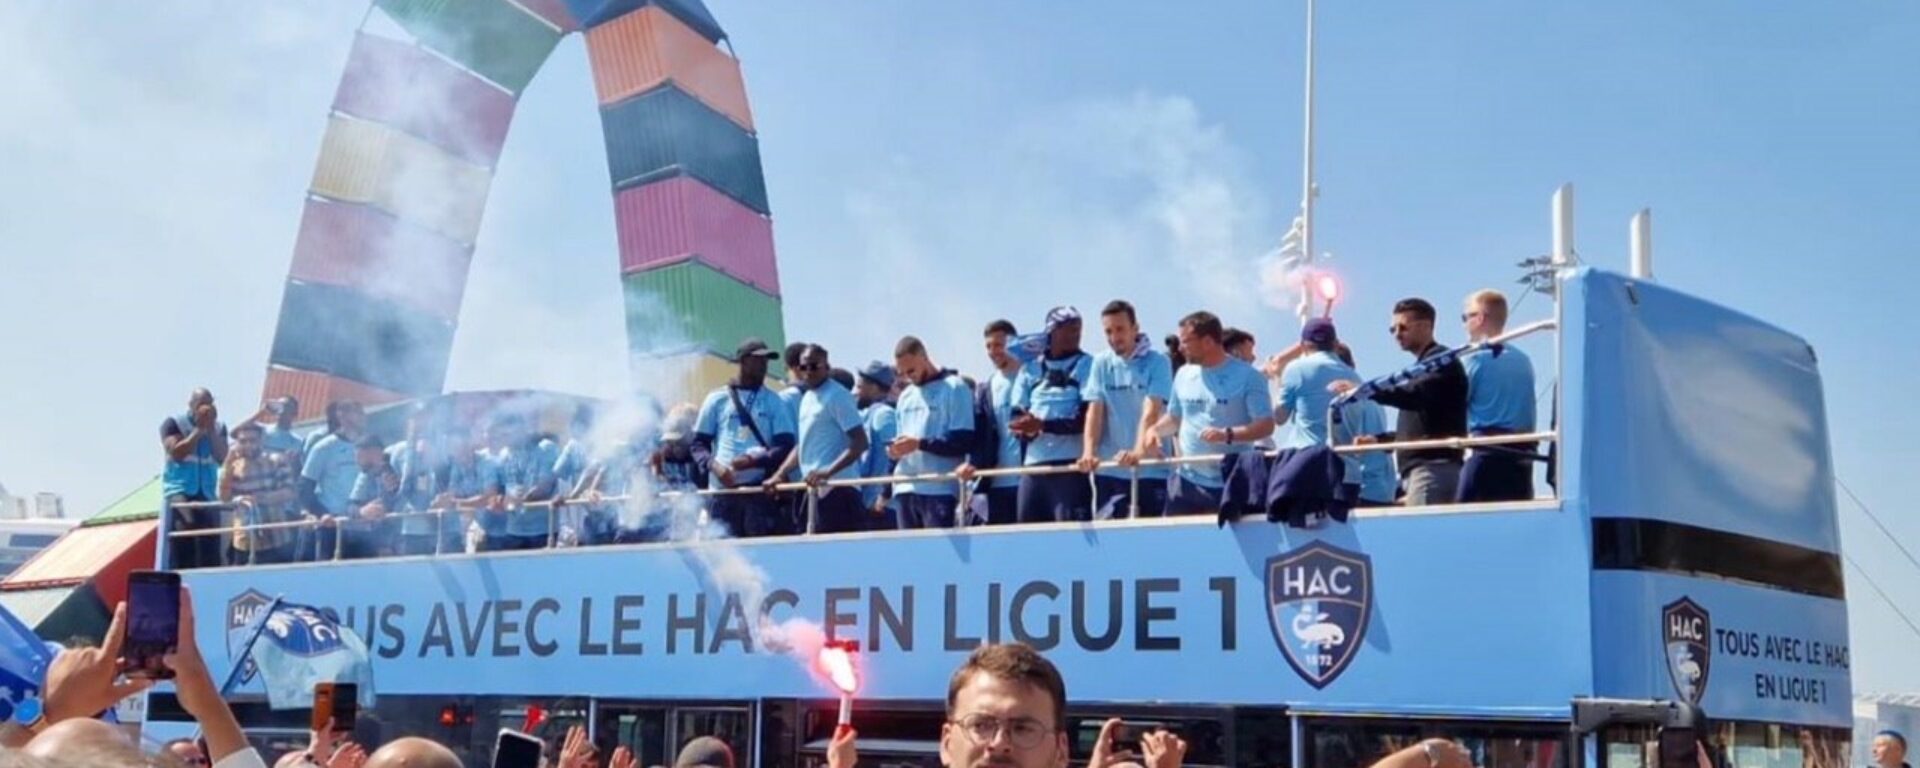 HAC Ligue 1